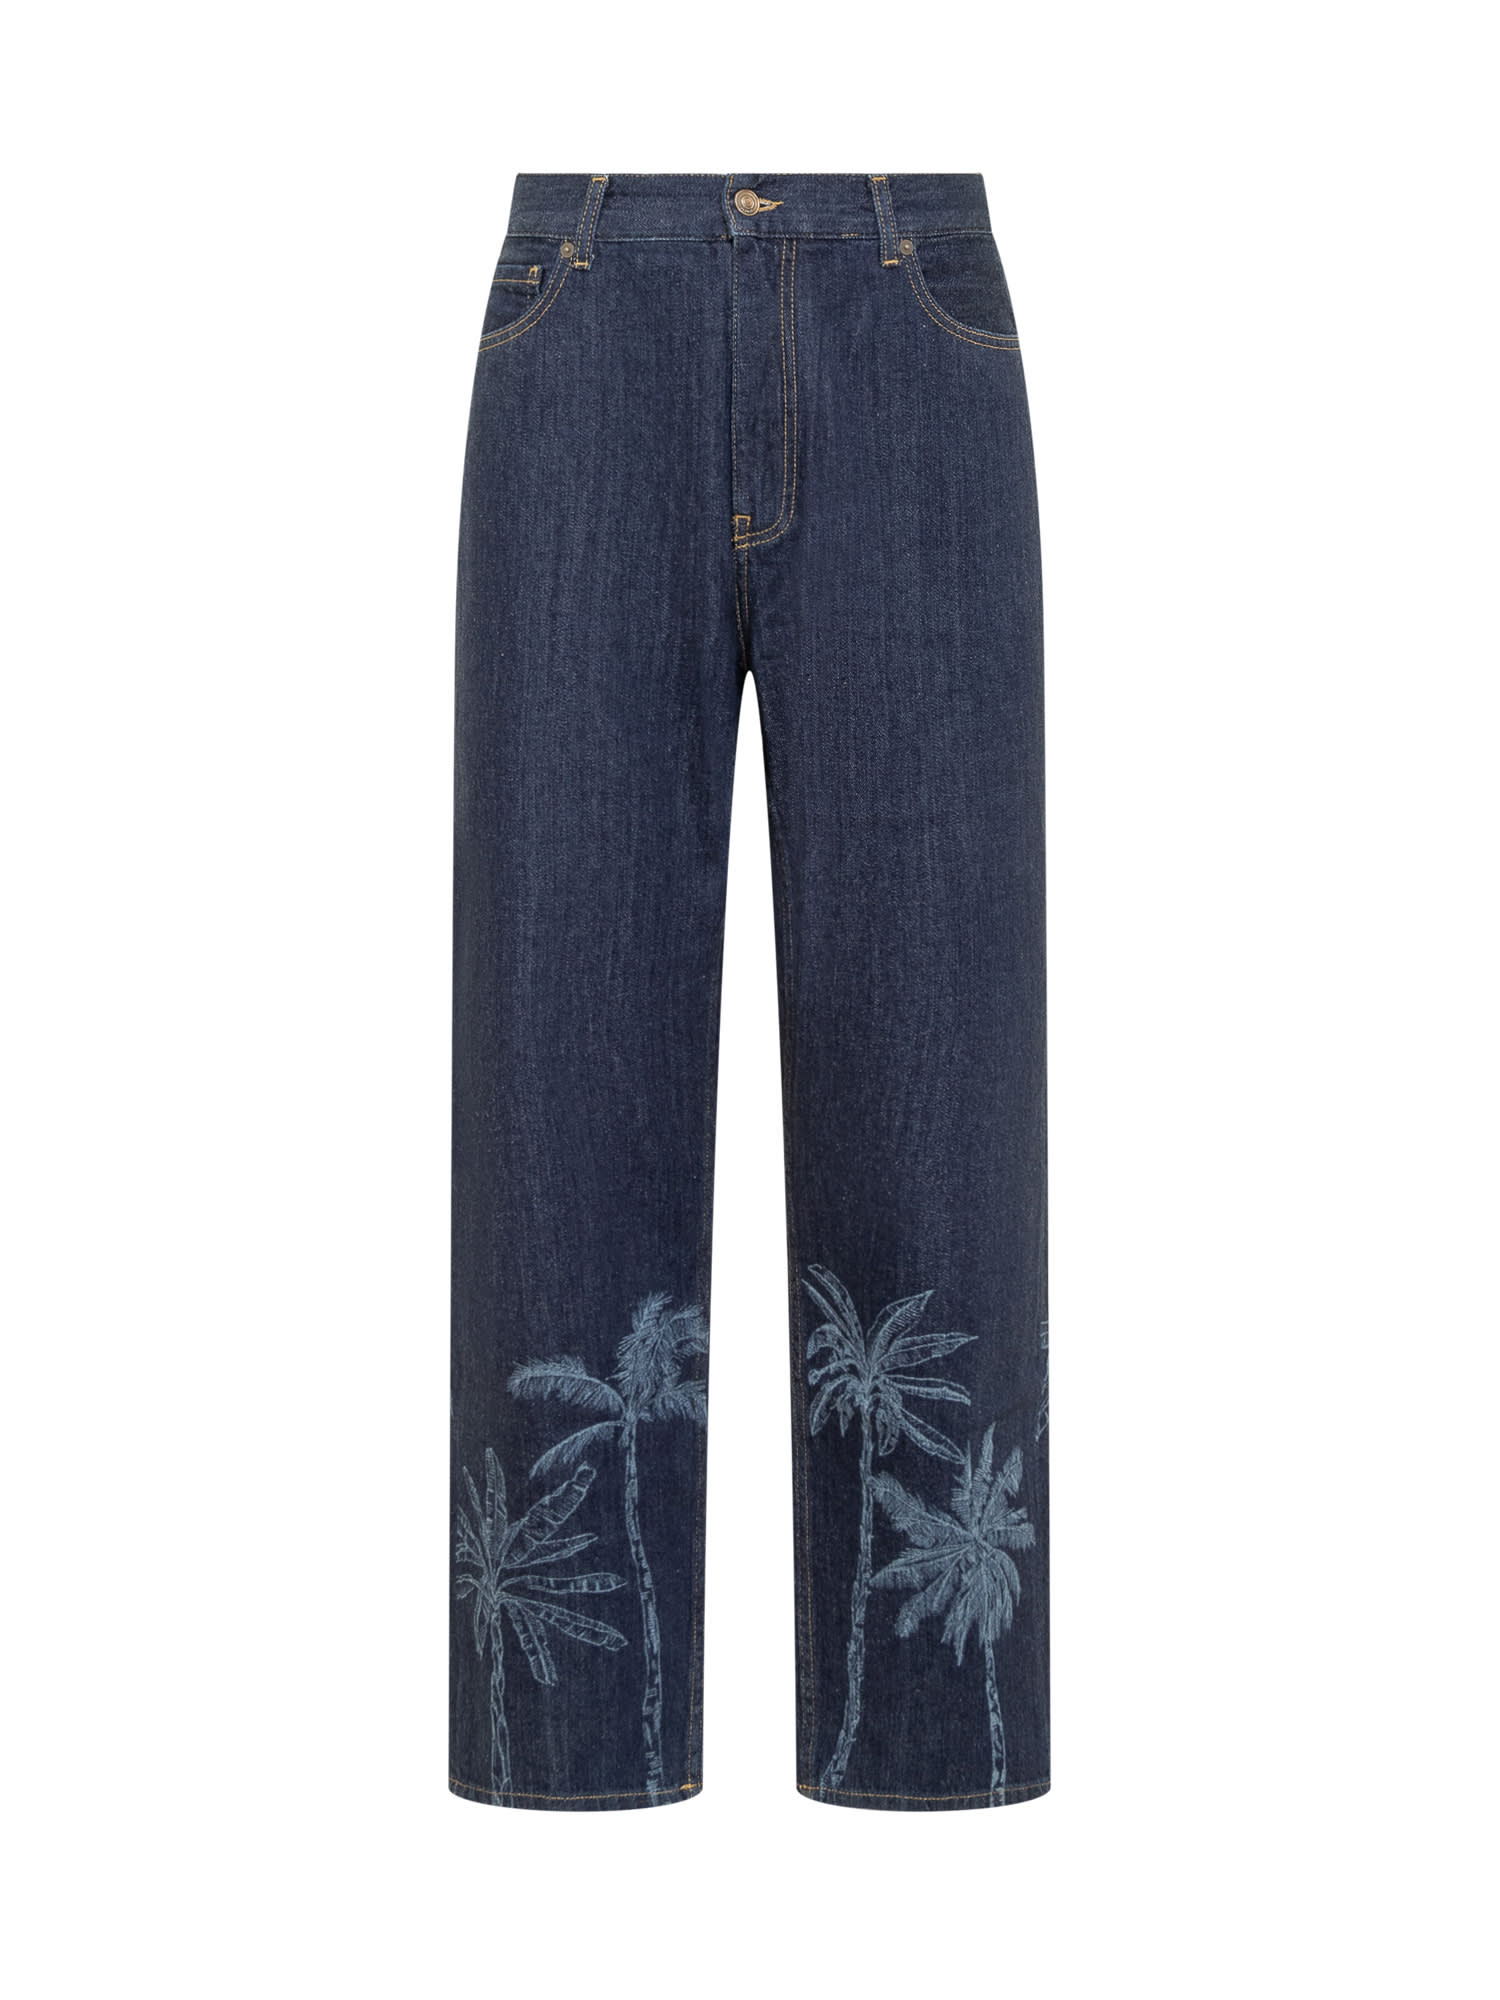 Jungle Toile Jeans